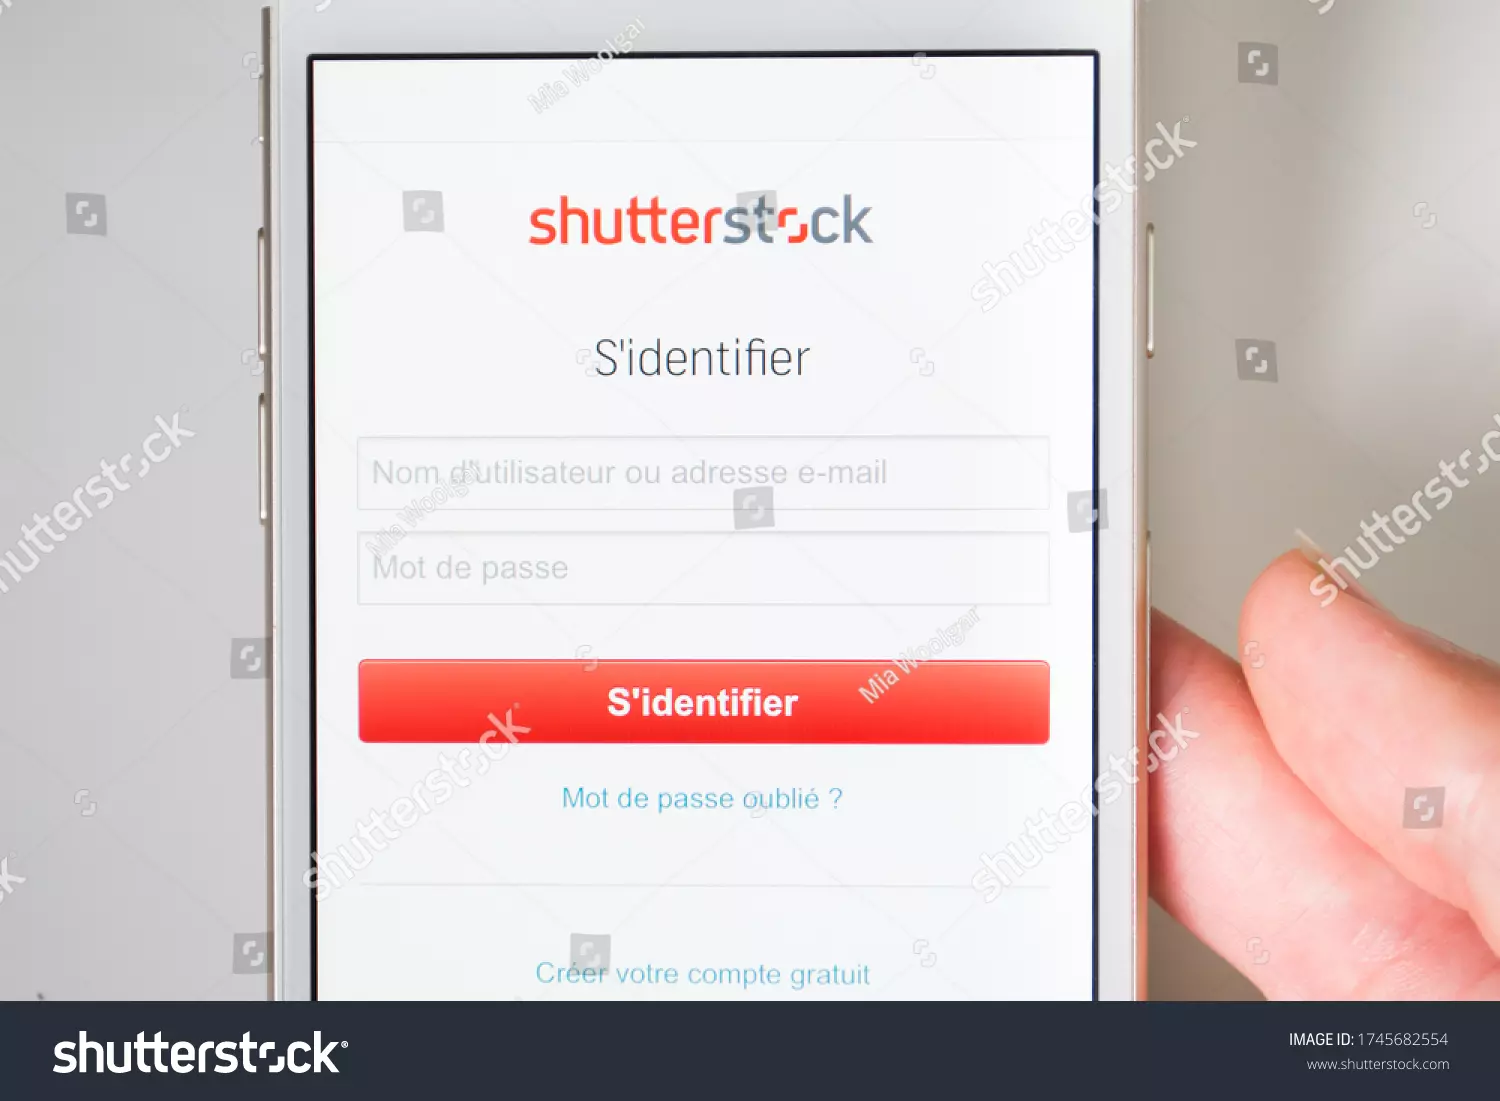 Shutterstock Contributor Login